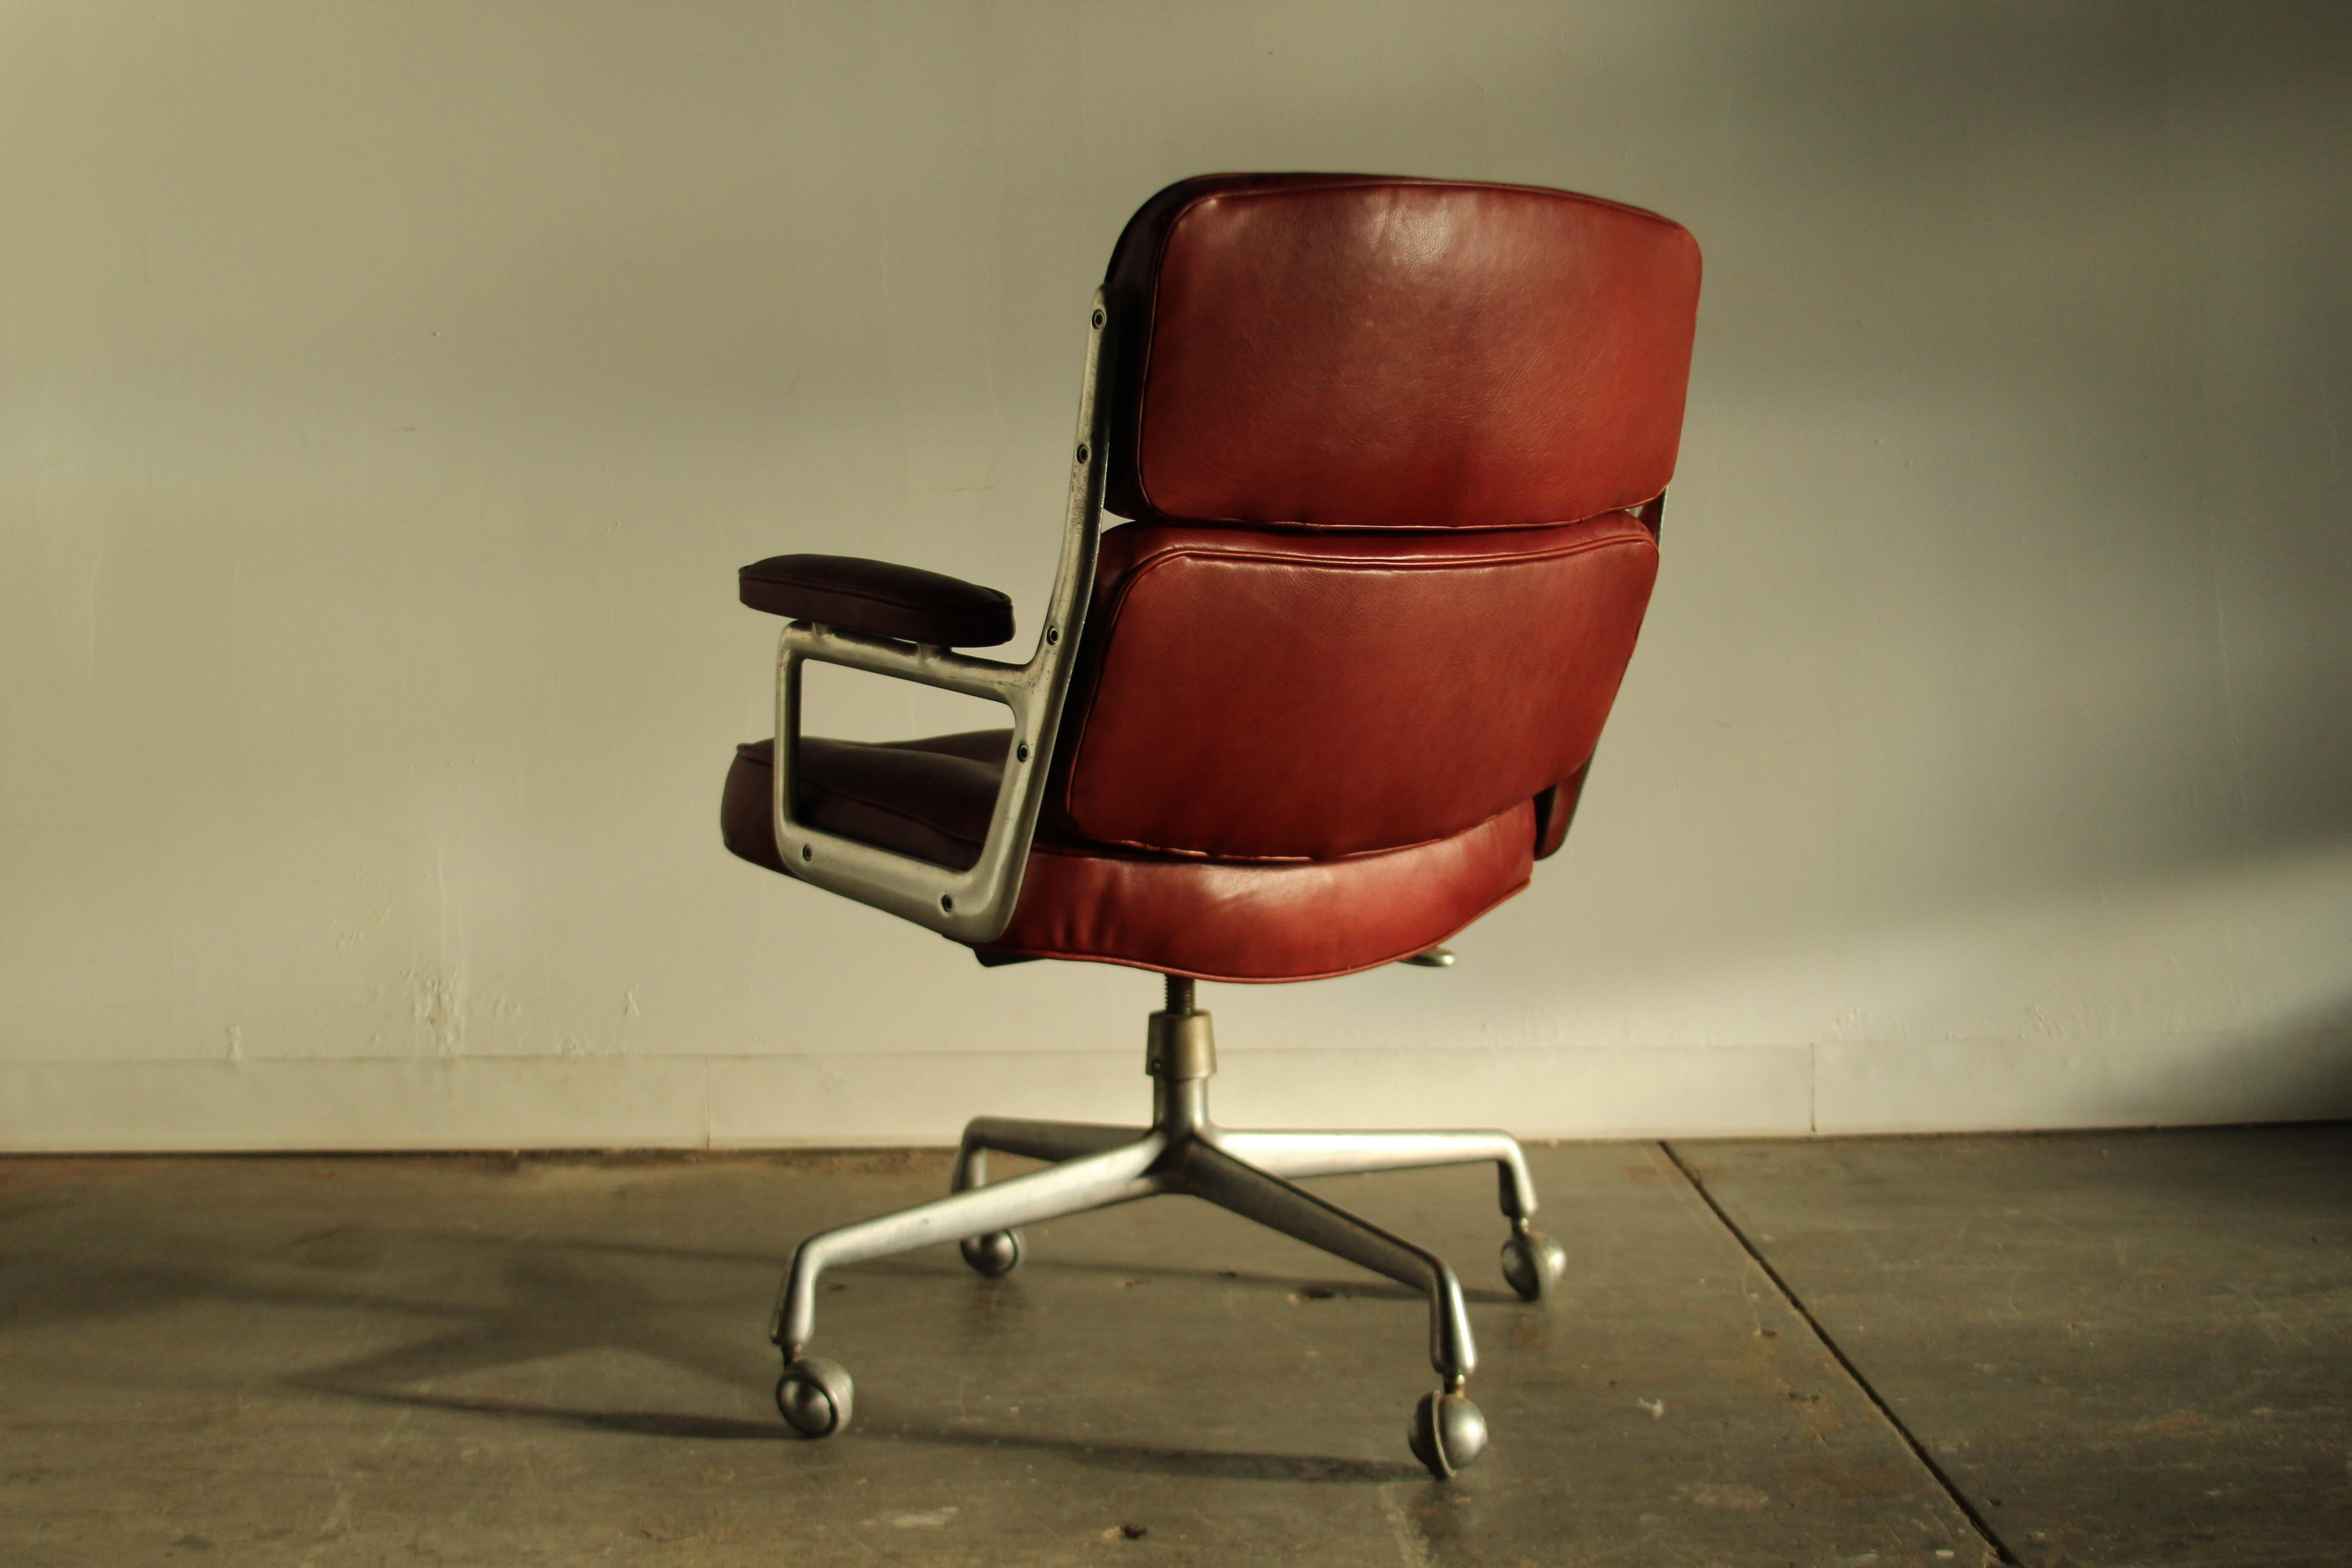 Herman Miller Eames Time Life Executive Chair aus Kalbsleder, 1970er Jahre (Aluminium)